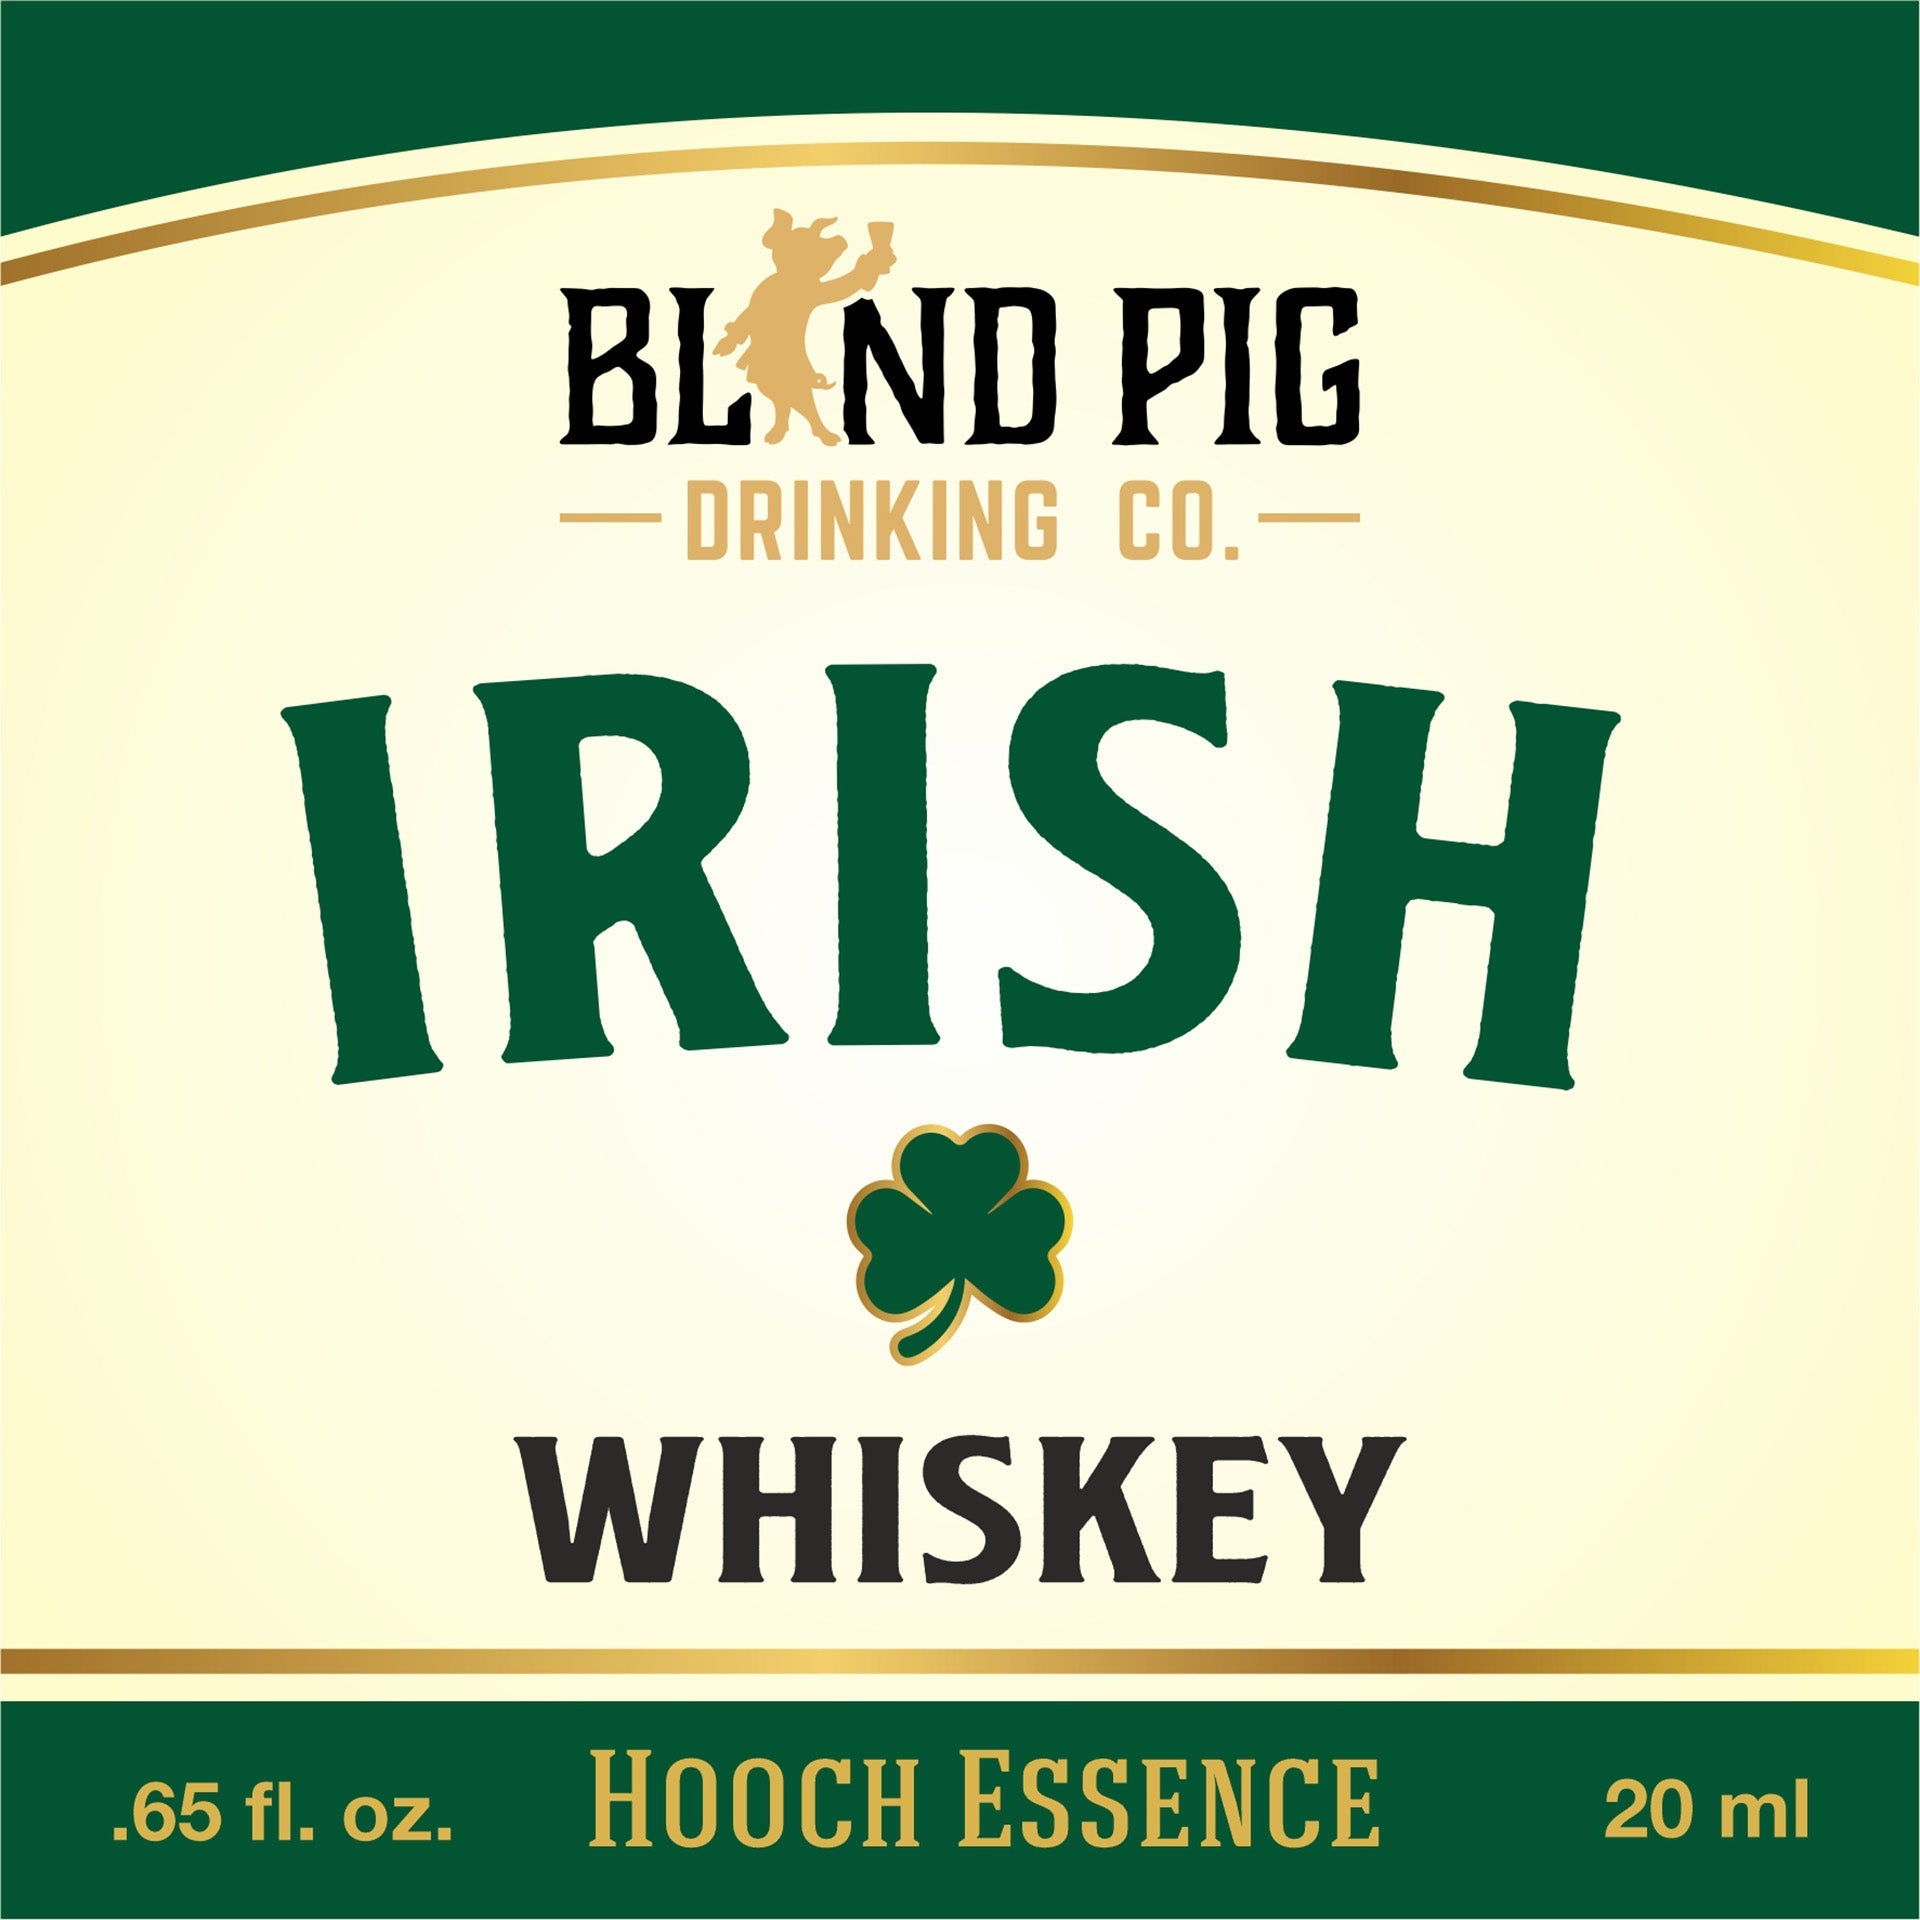 Personalized Irish Whiskey Barrel + Irish Whiskey Making Kit | The Home Distiller's Choice for DIY Spirits | Distilling Co. Series - Blind Pig Drinking Co.